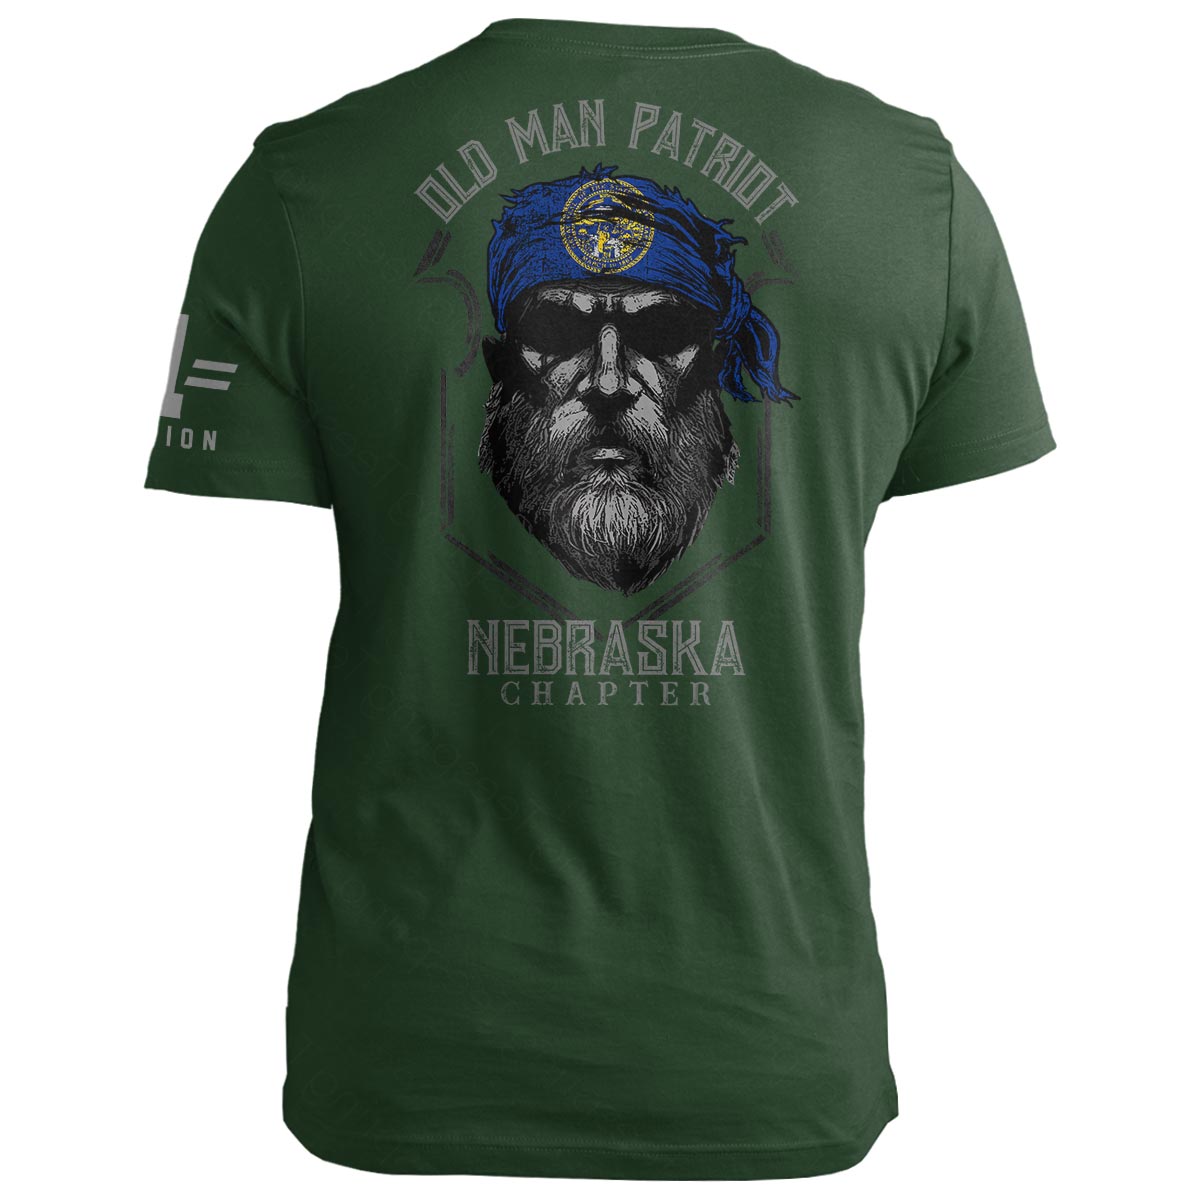 Nebraska Old Man Patriot